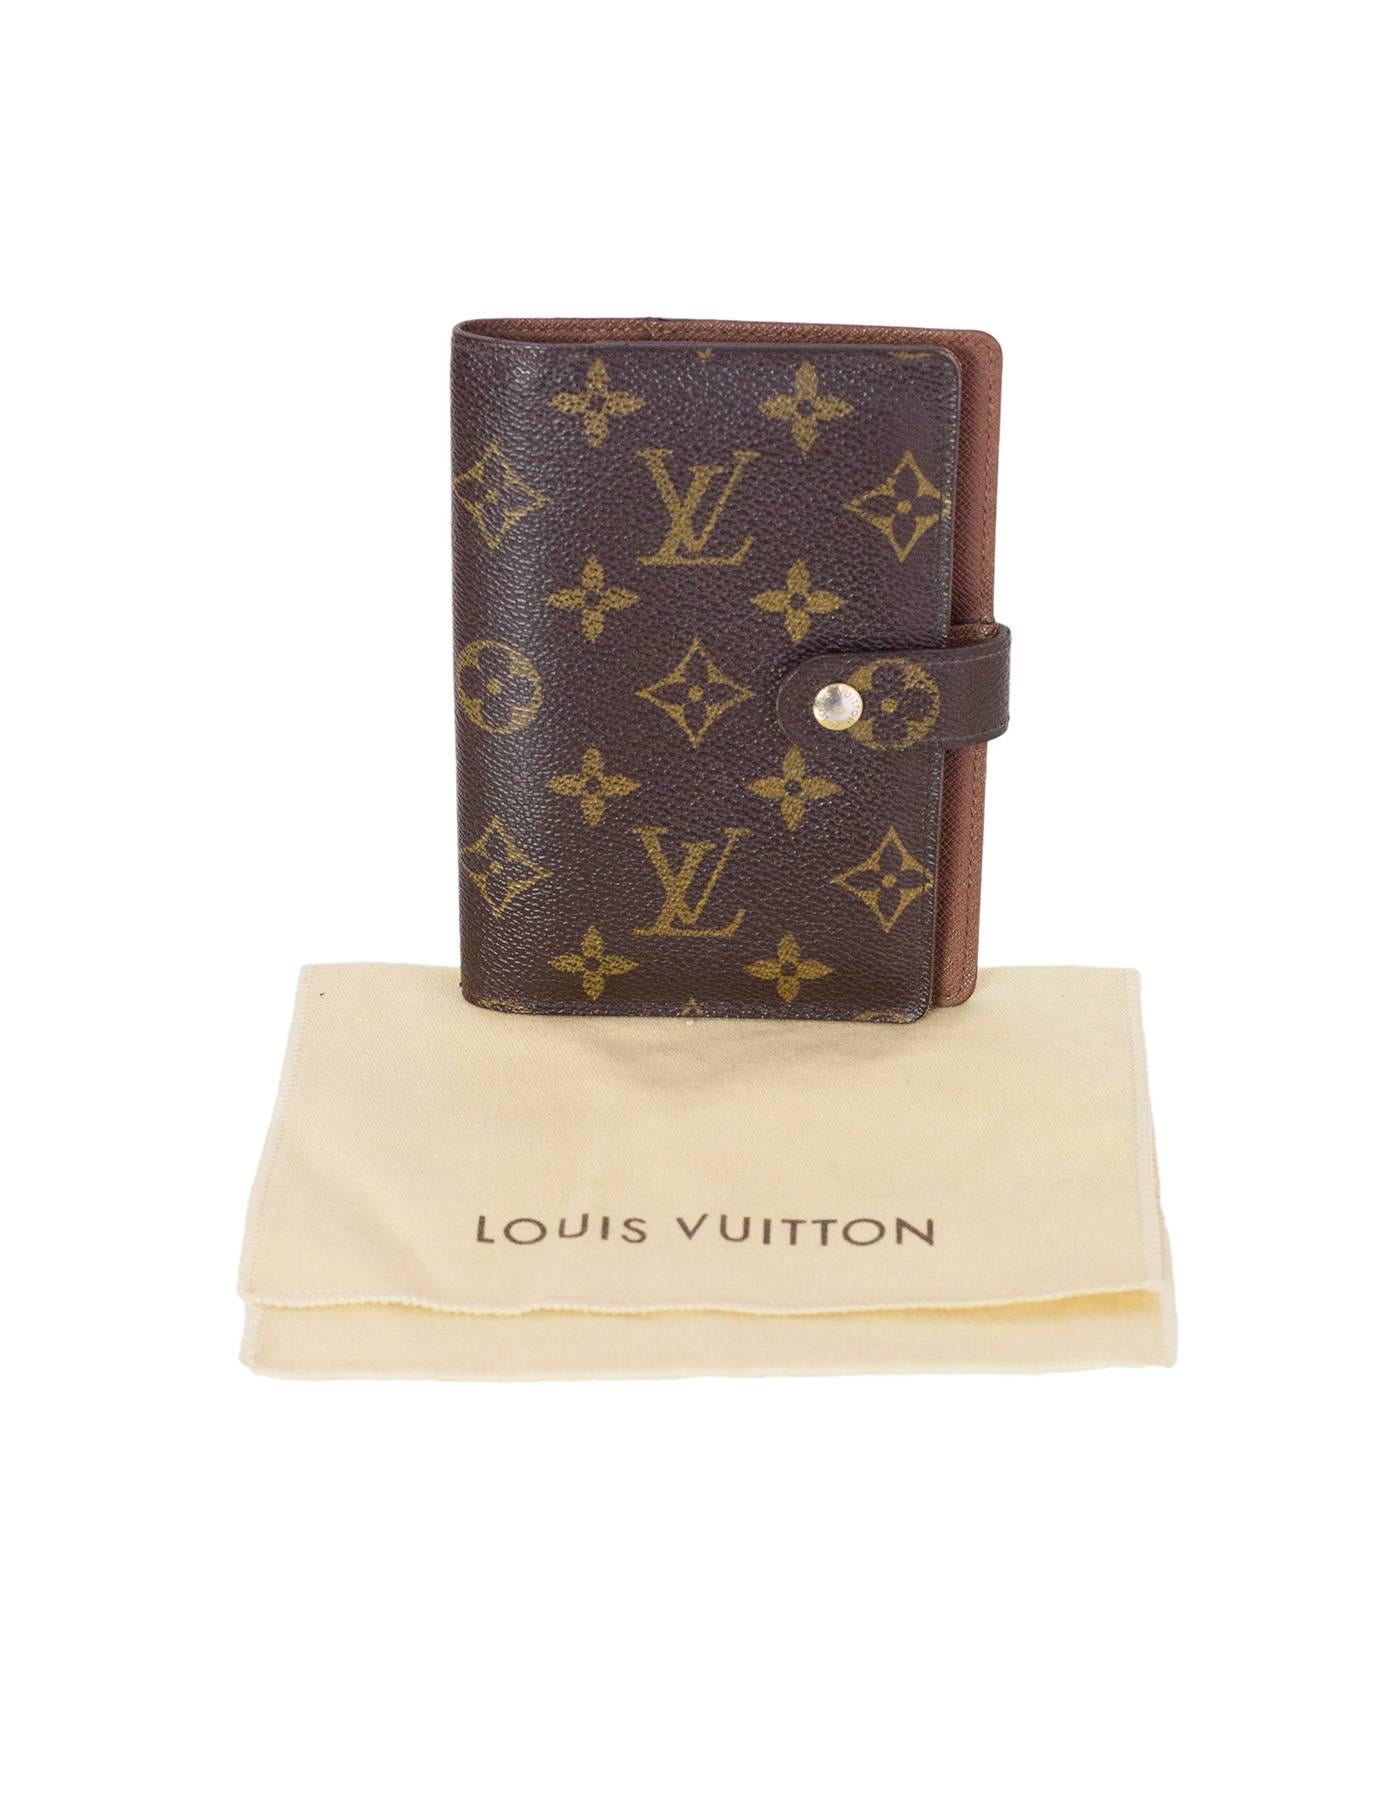 Louis Vuitton Monogram Small Ring Agenda Cover 4